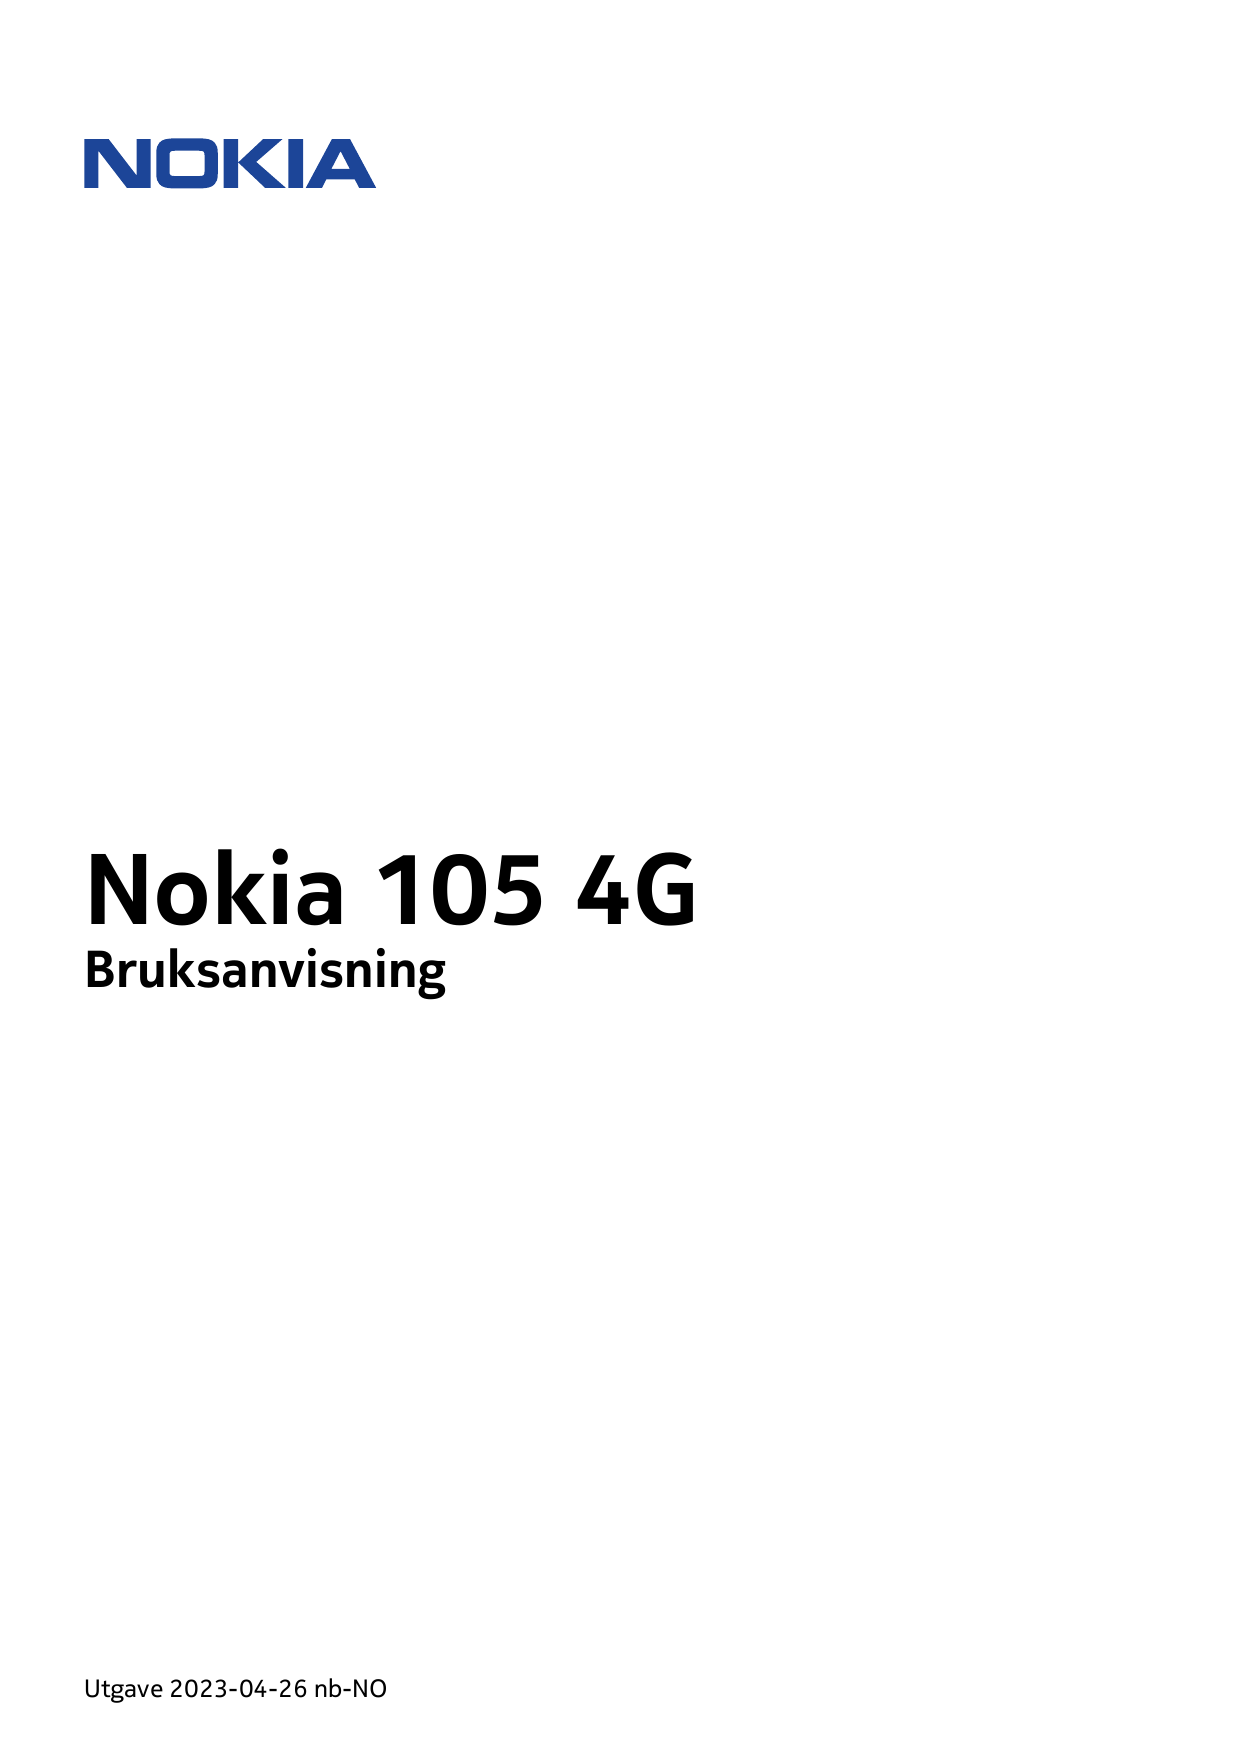 Nokia 105 4GBruksanvisningUtgave 2023-04-26 nb-NO